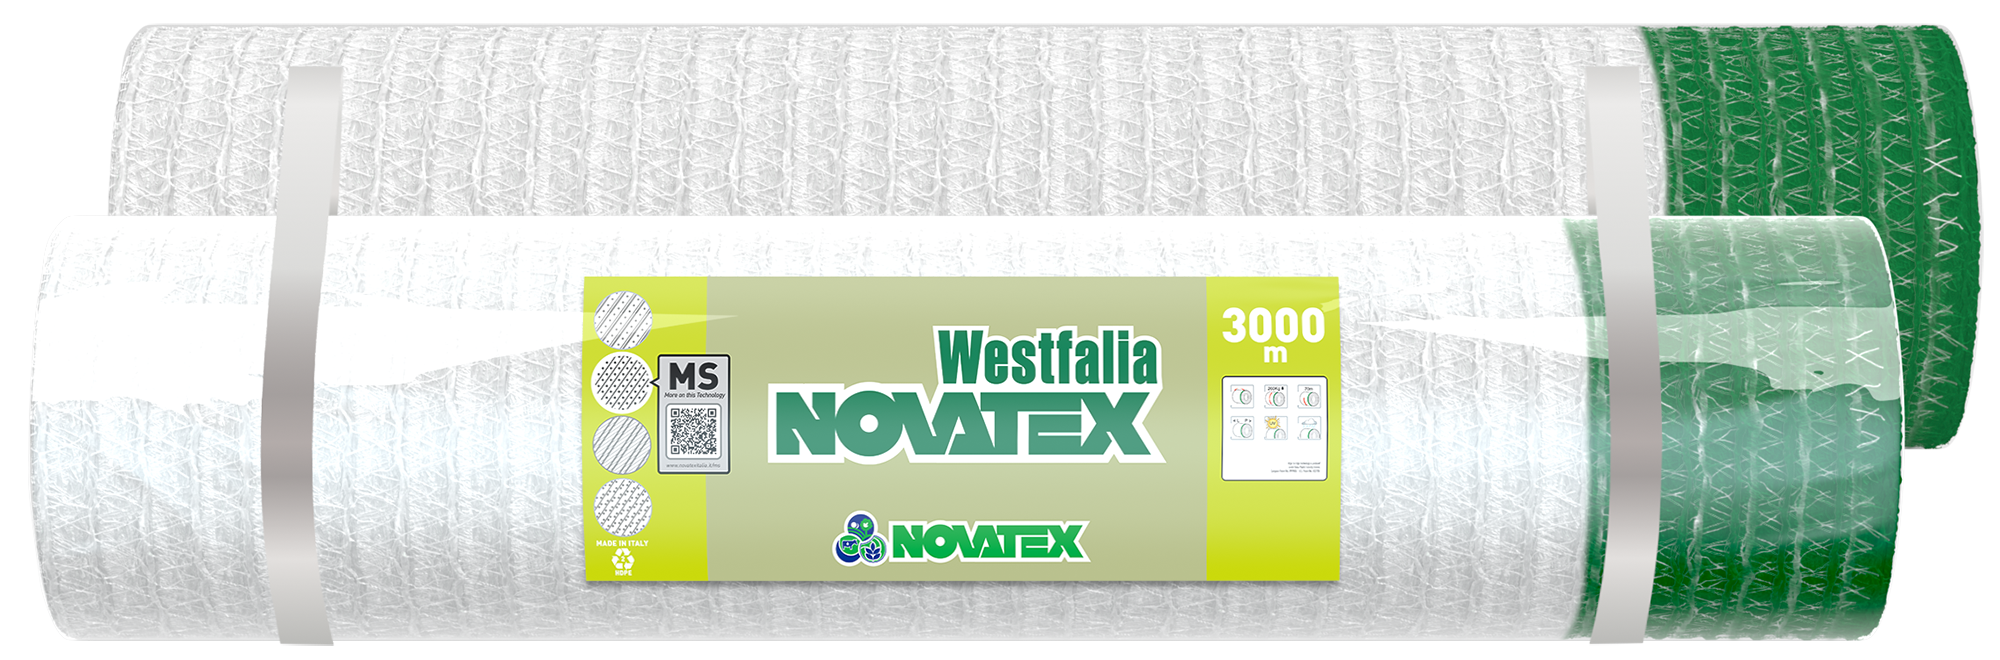 Agri Novatex Polska | Westfalia Novatex